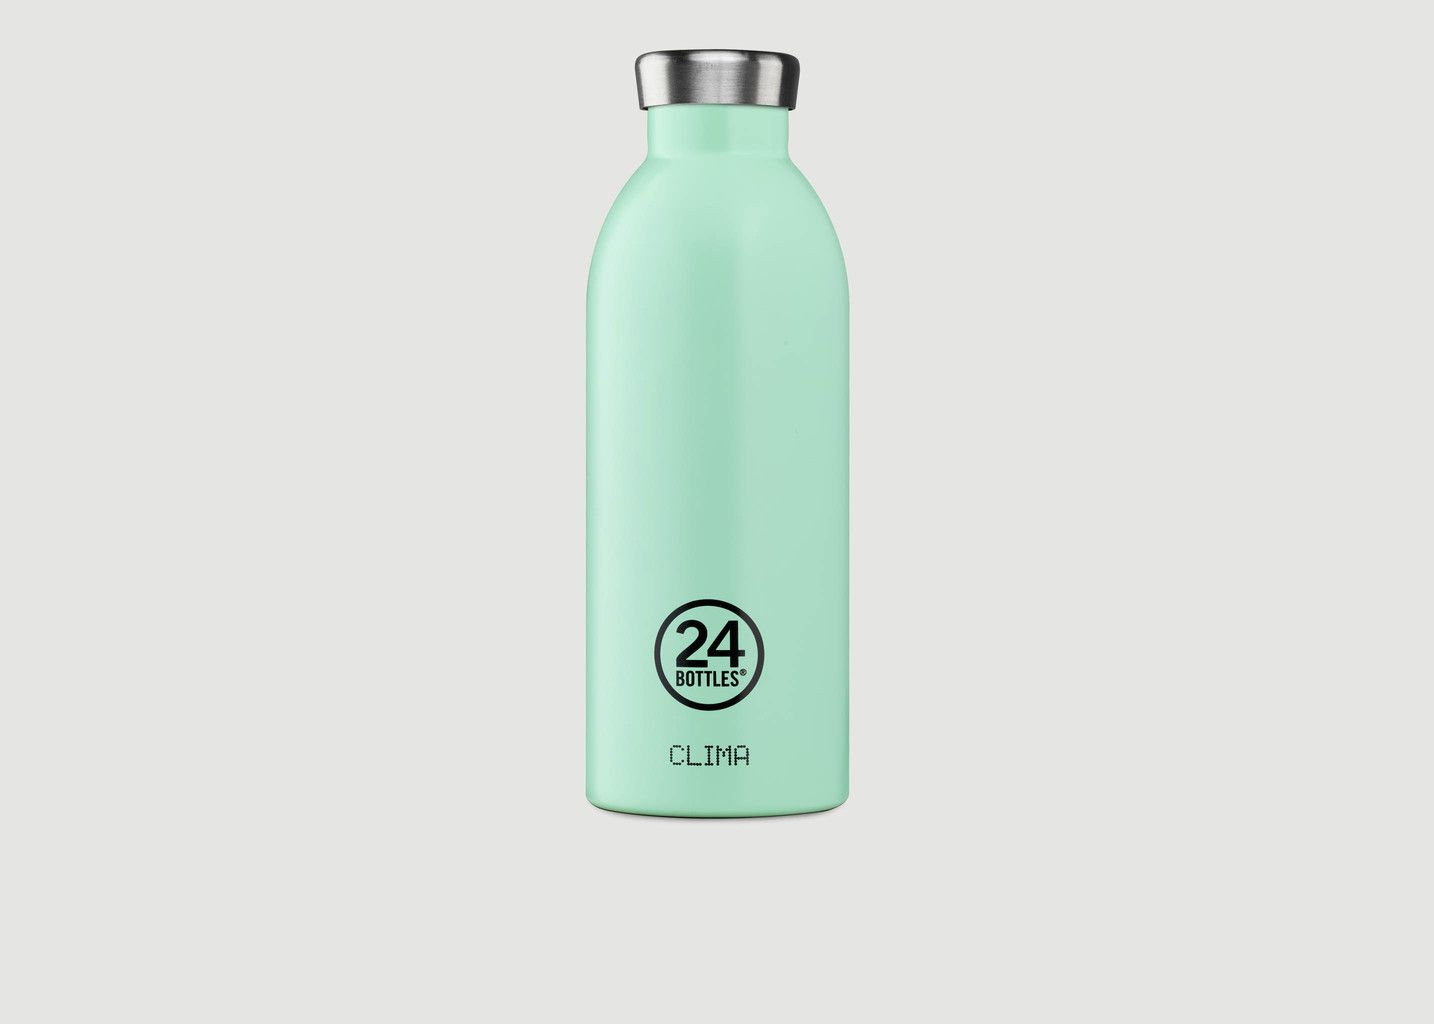 Clima Bottle 500ml isotherme - 24 Bottles